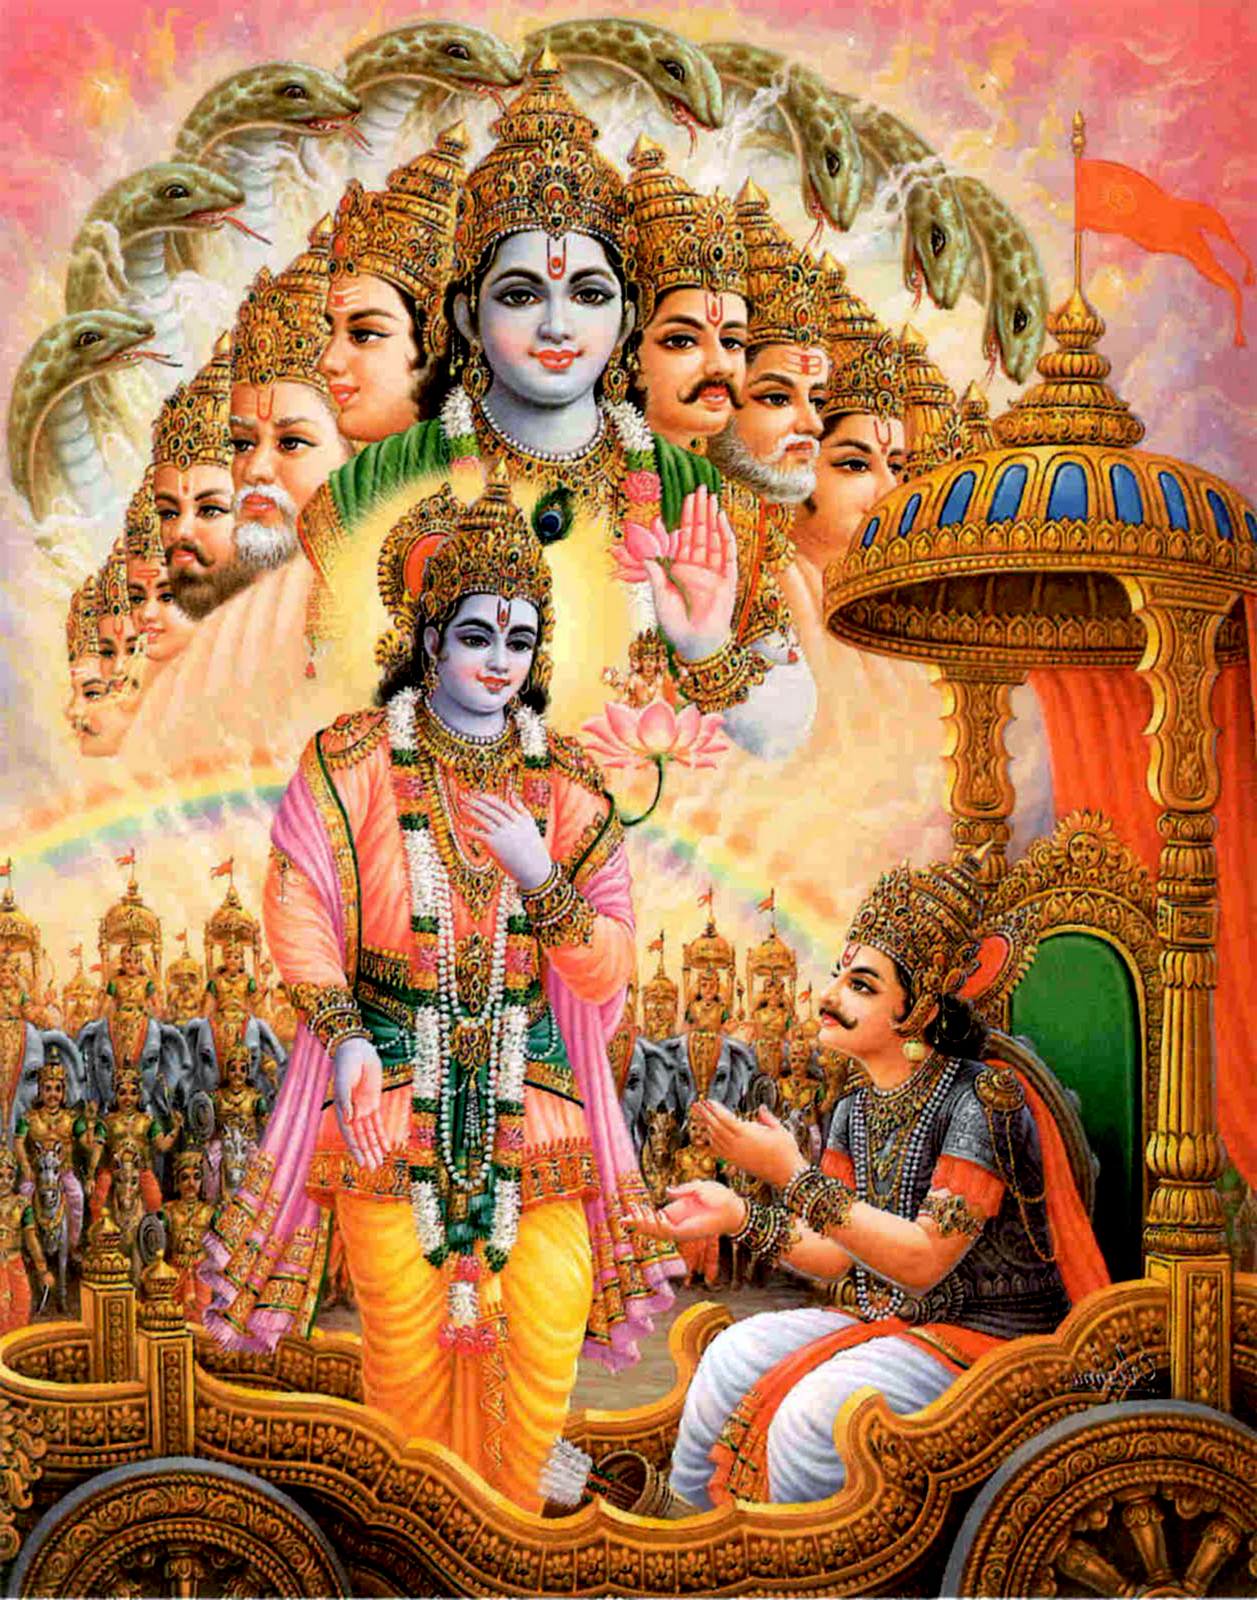 Krishna Wallpaper Hd For Mobile Free Download